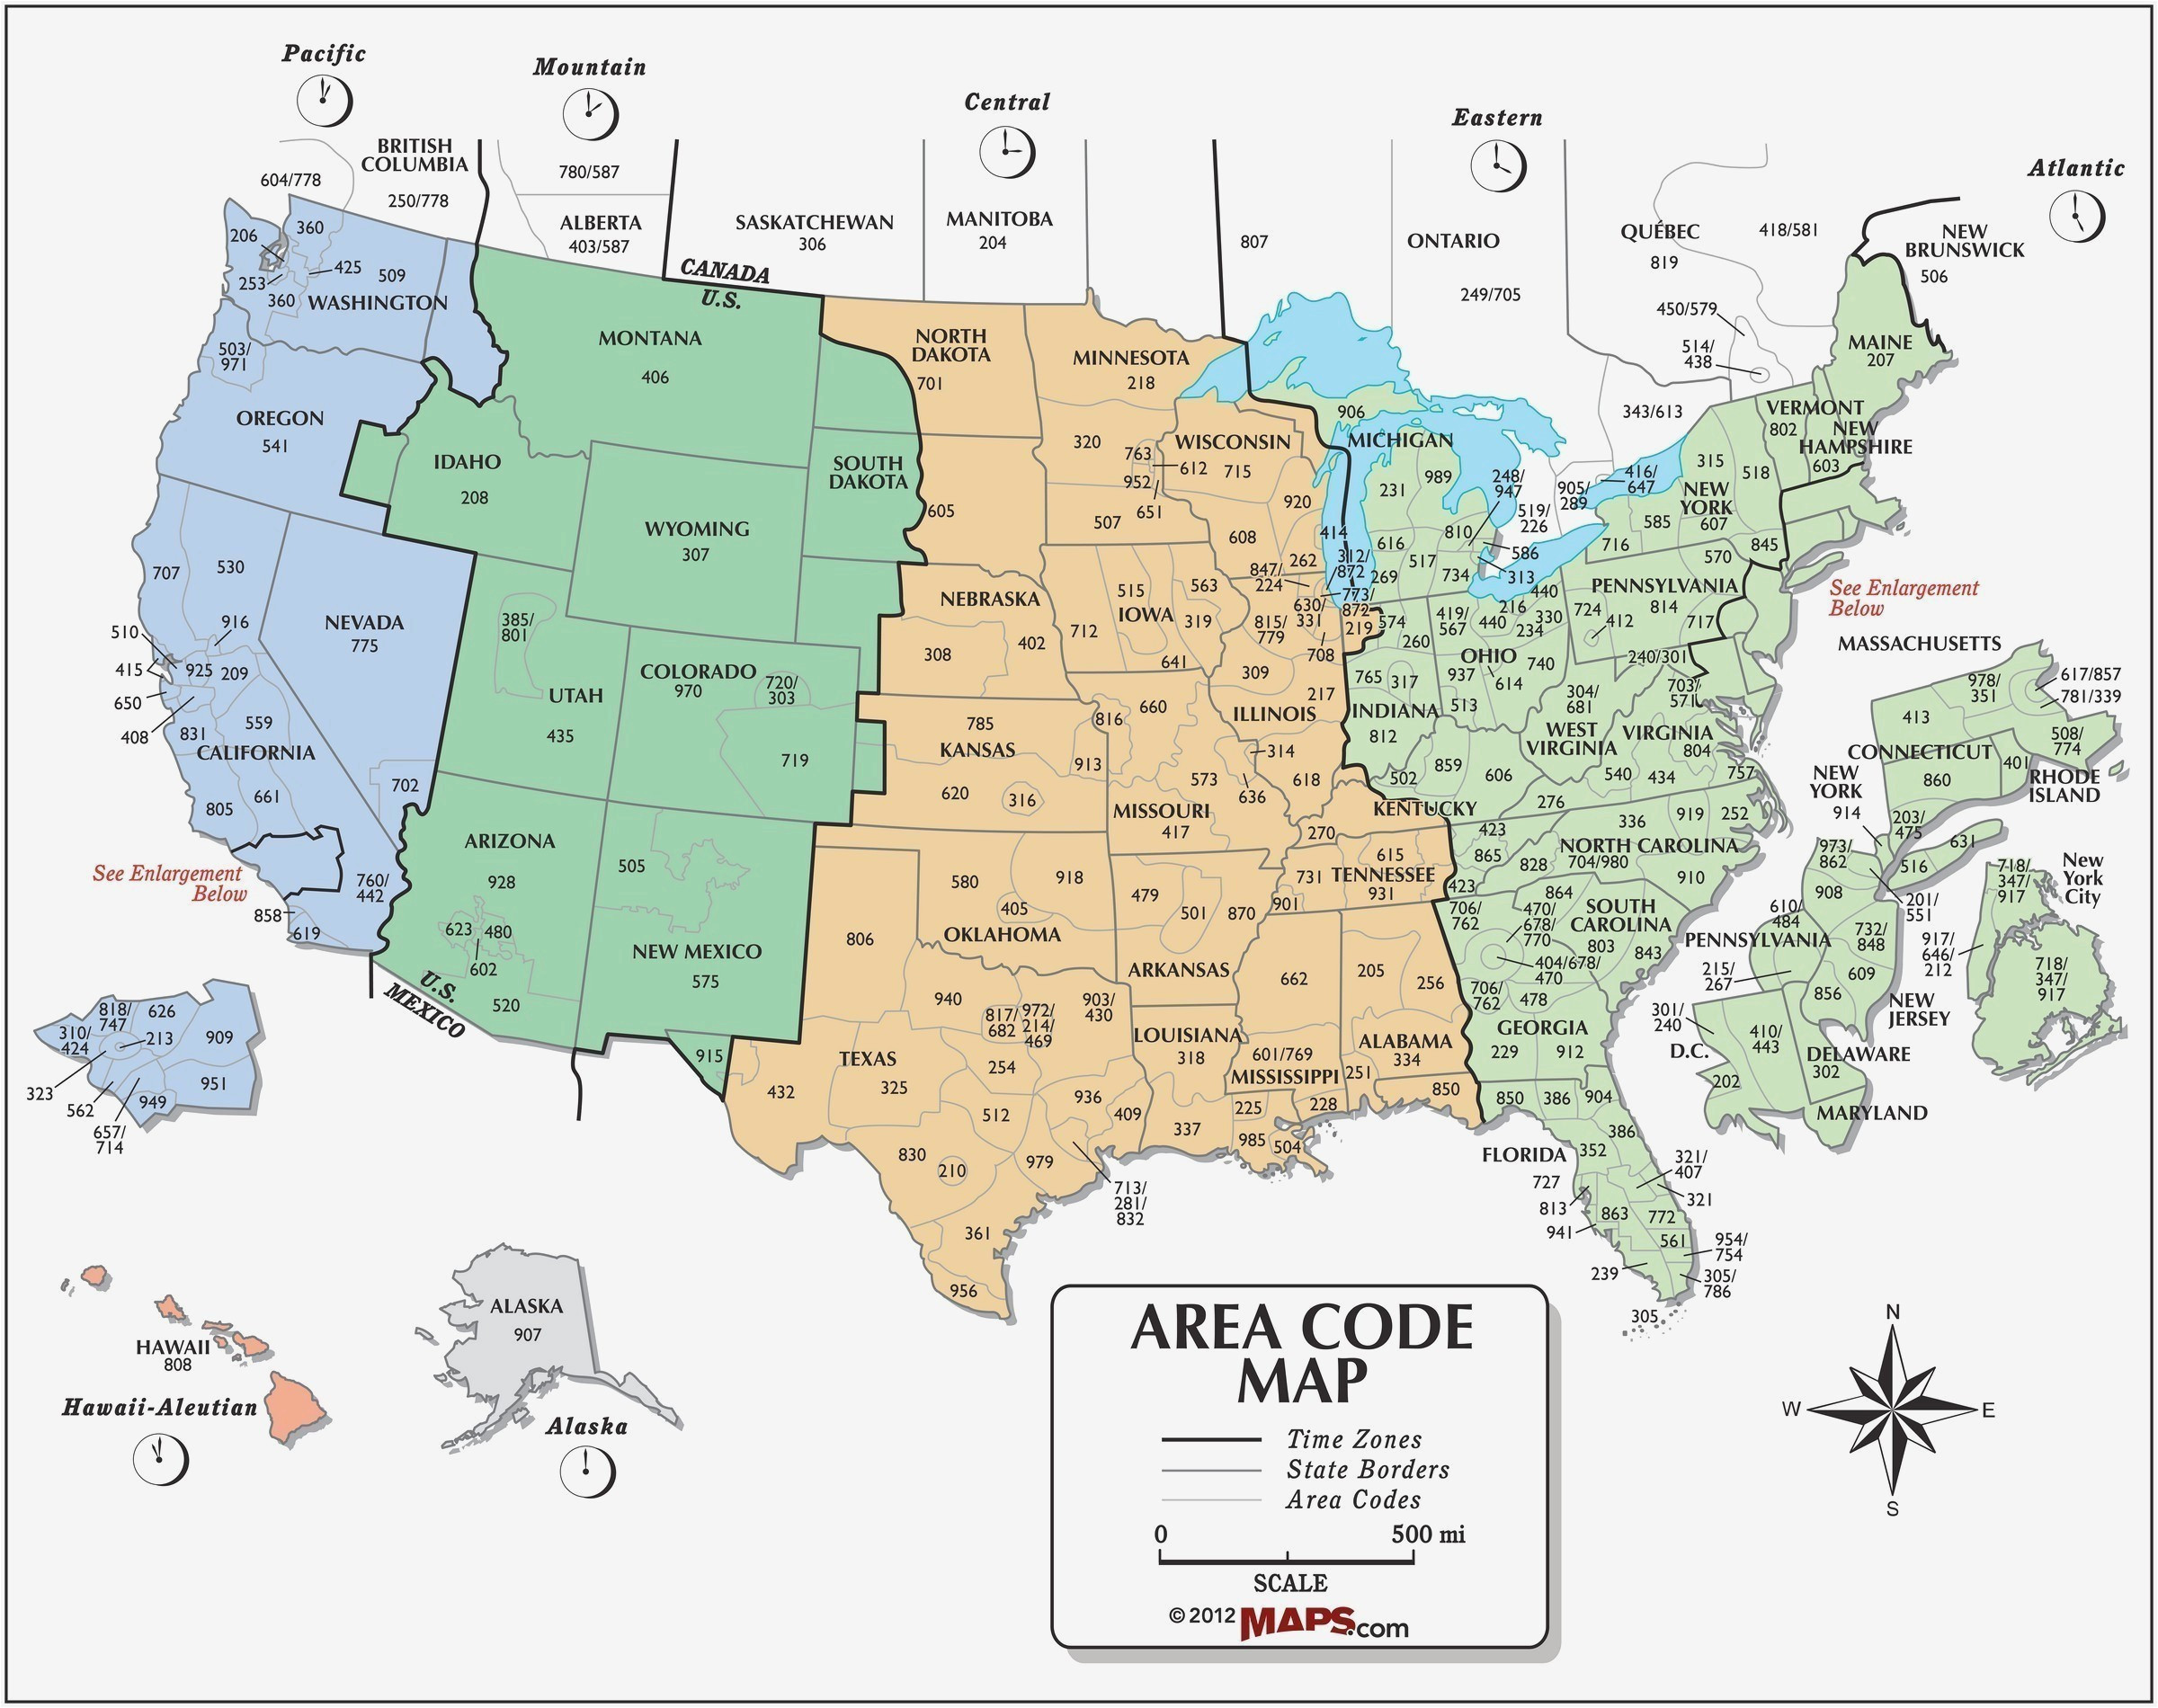 tomtom california map united states zone map new tomtom us